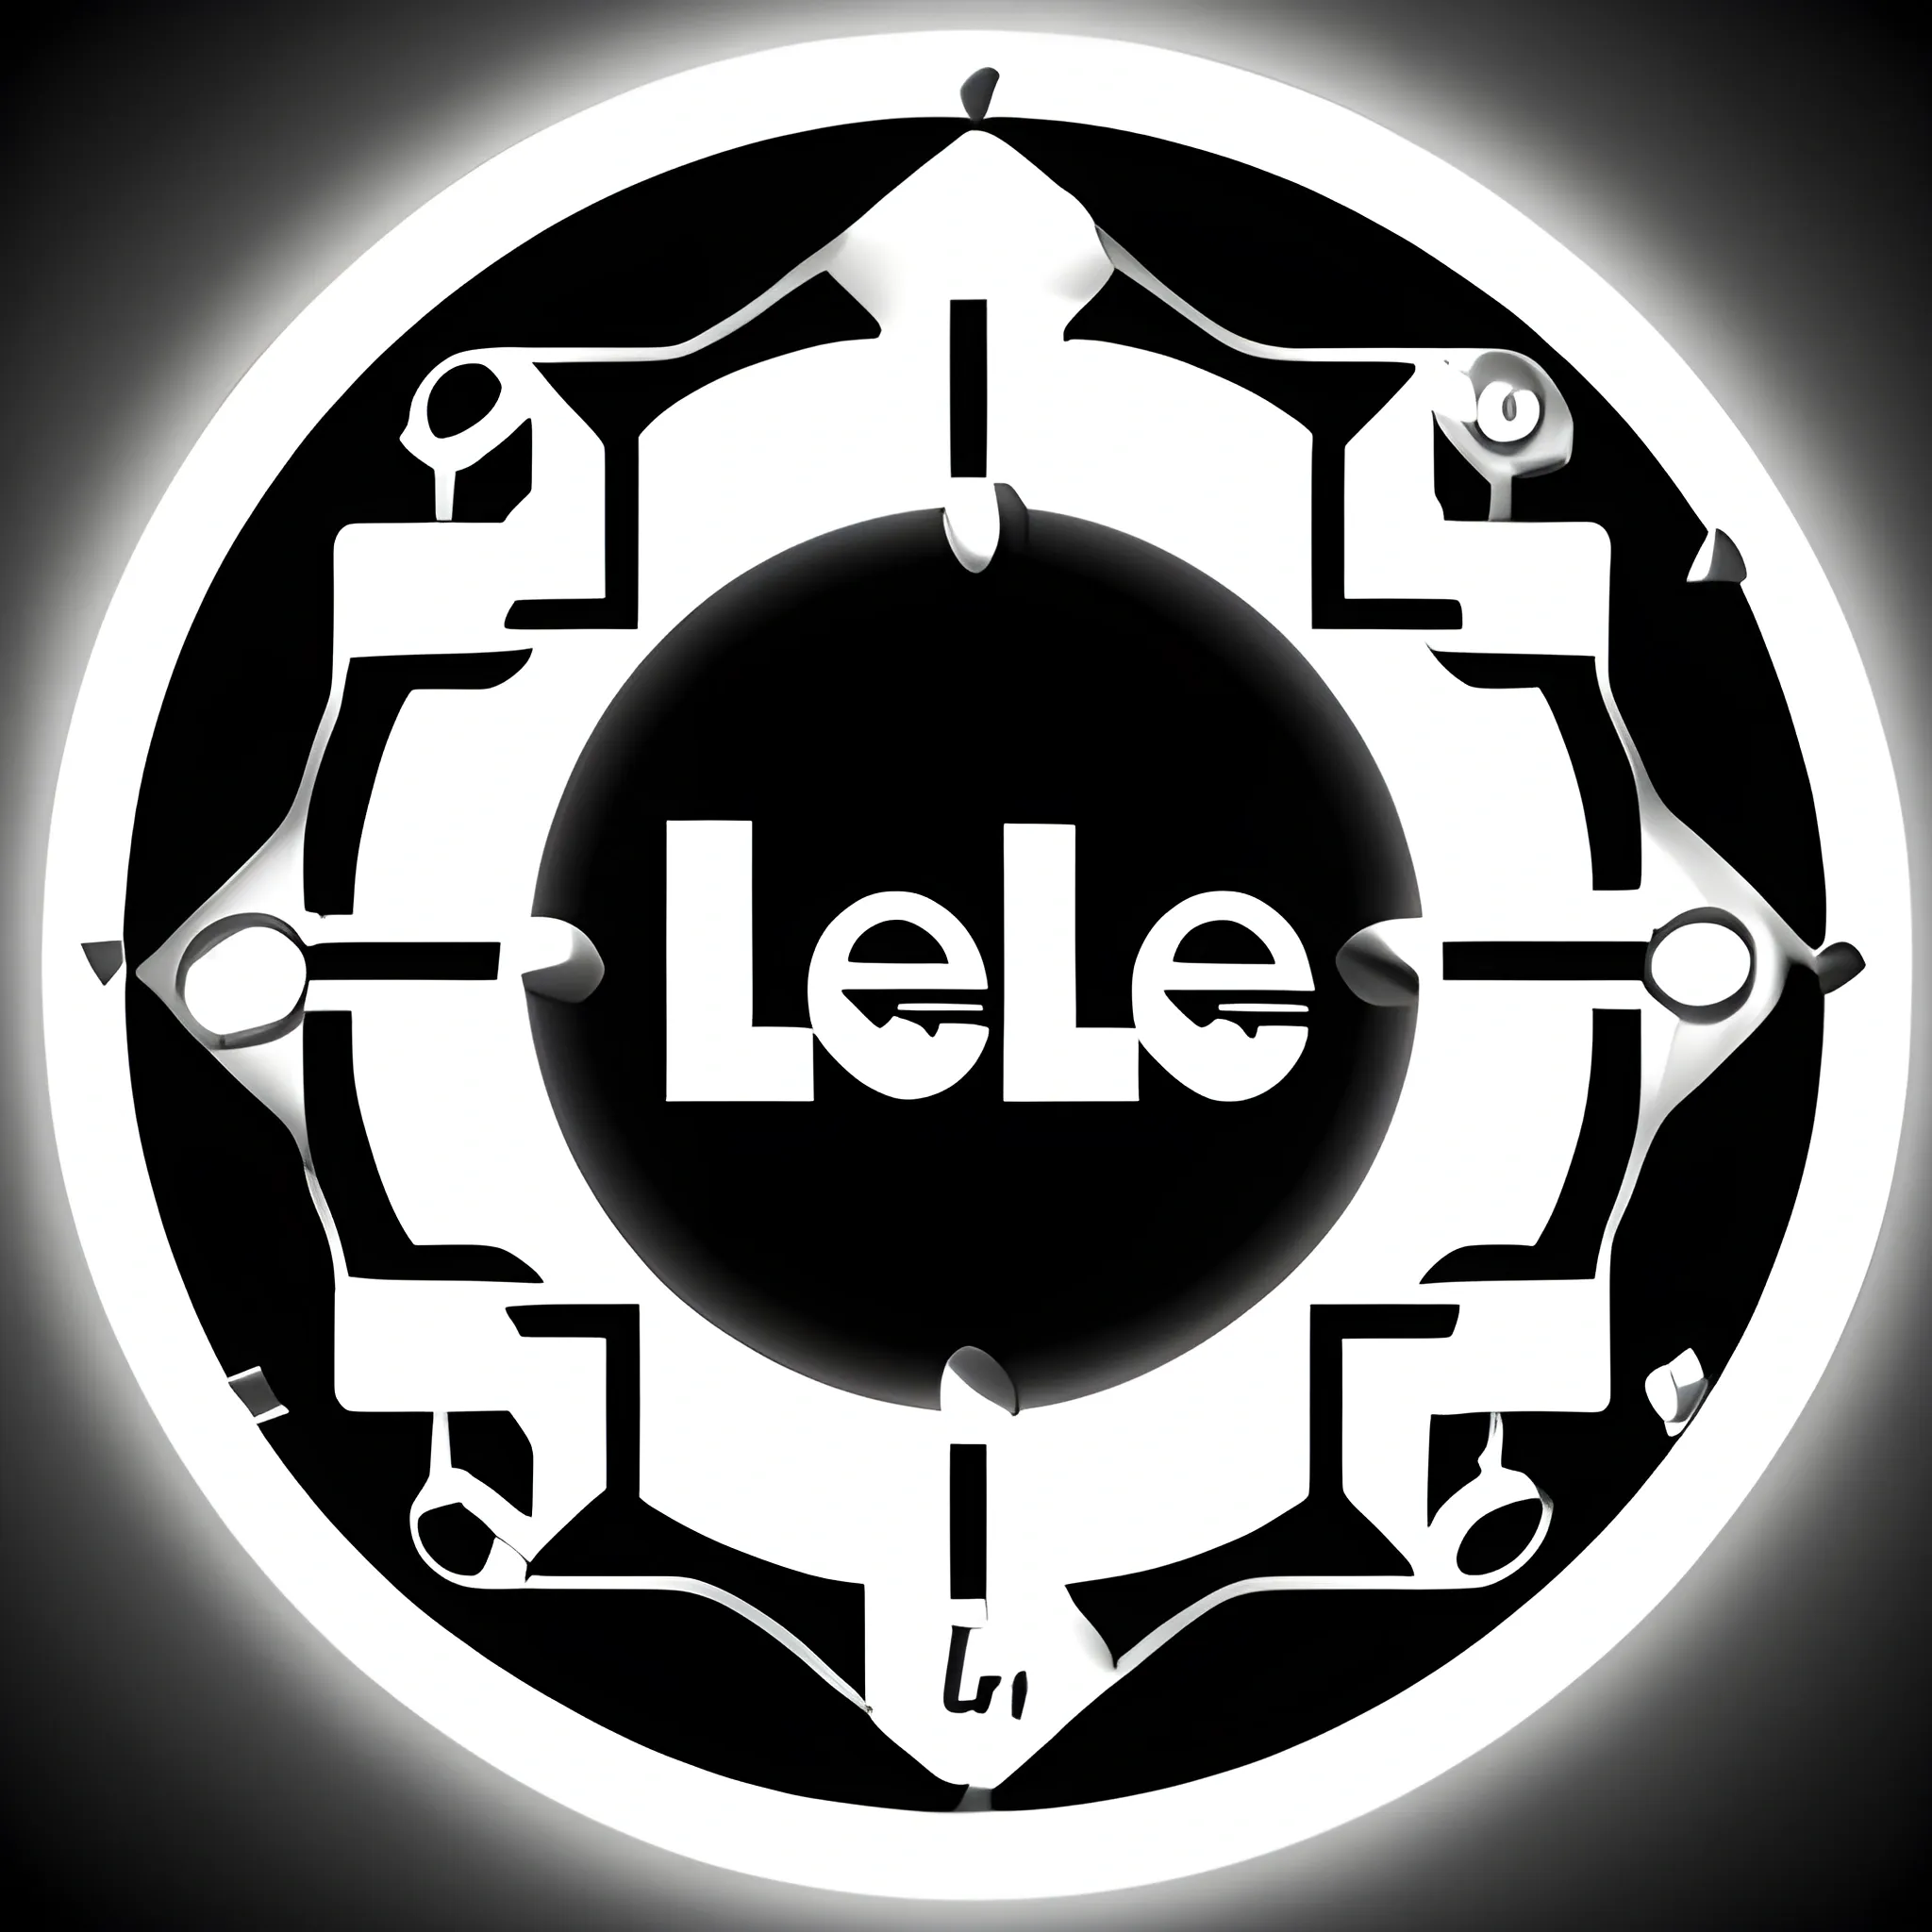 A logo of Reels Lite

